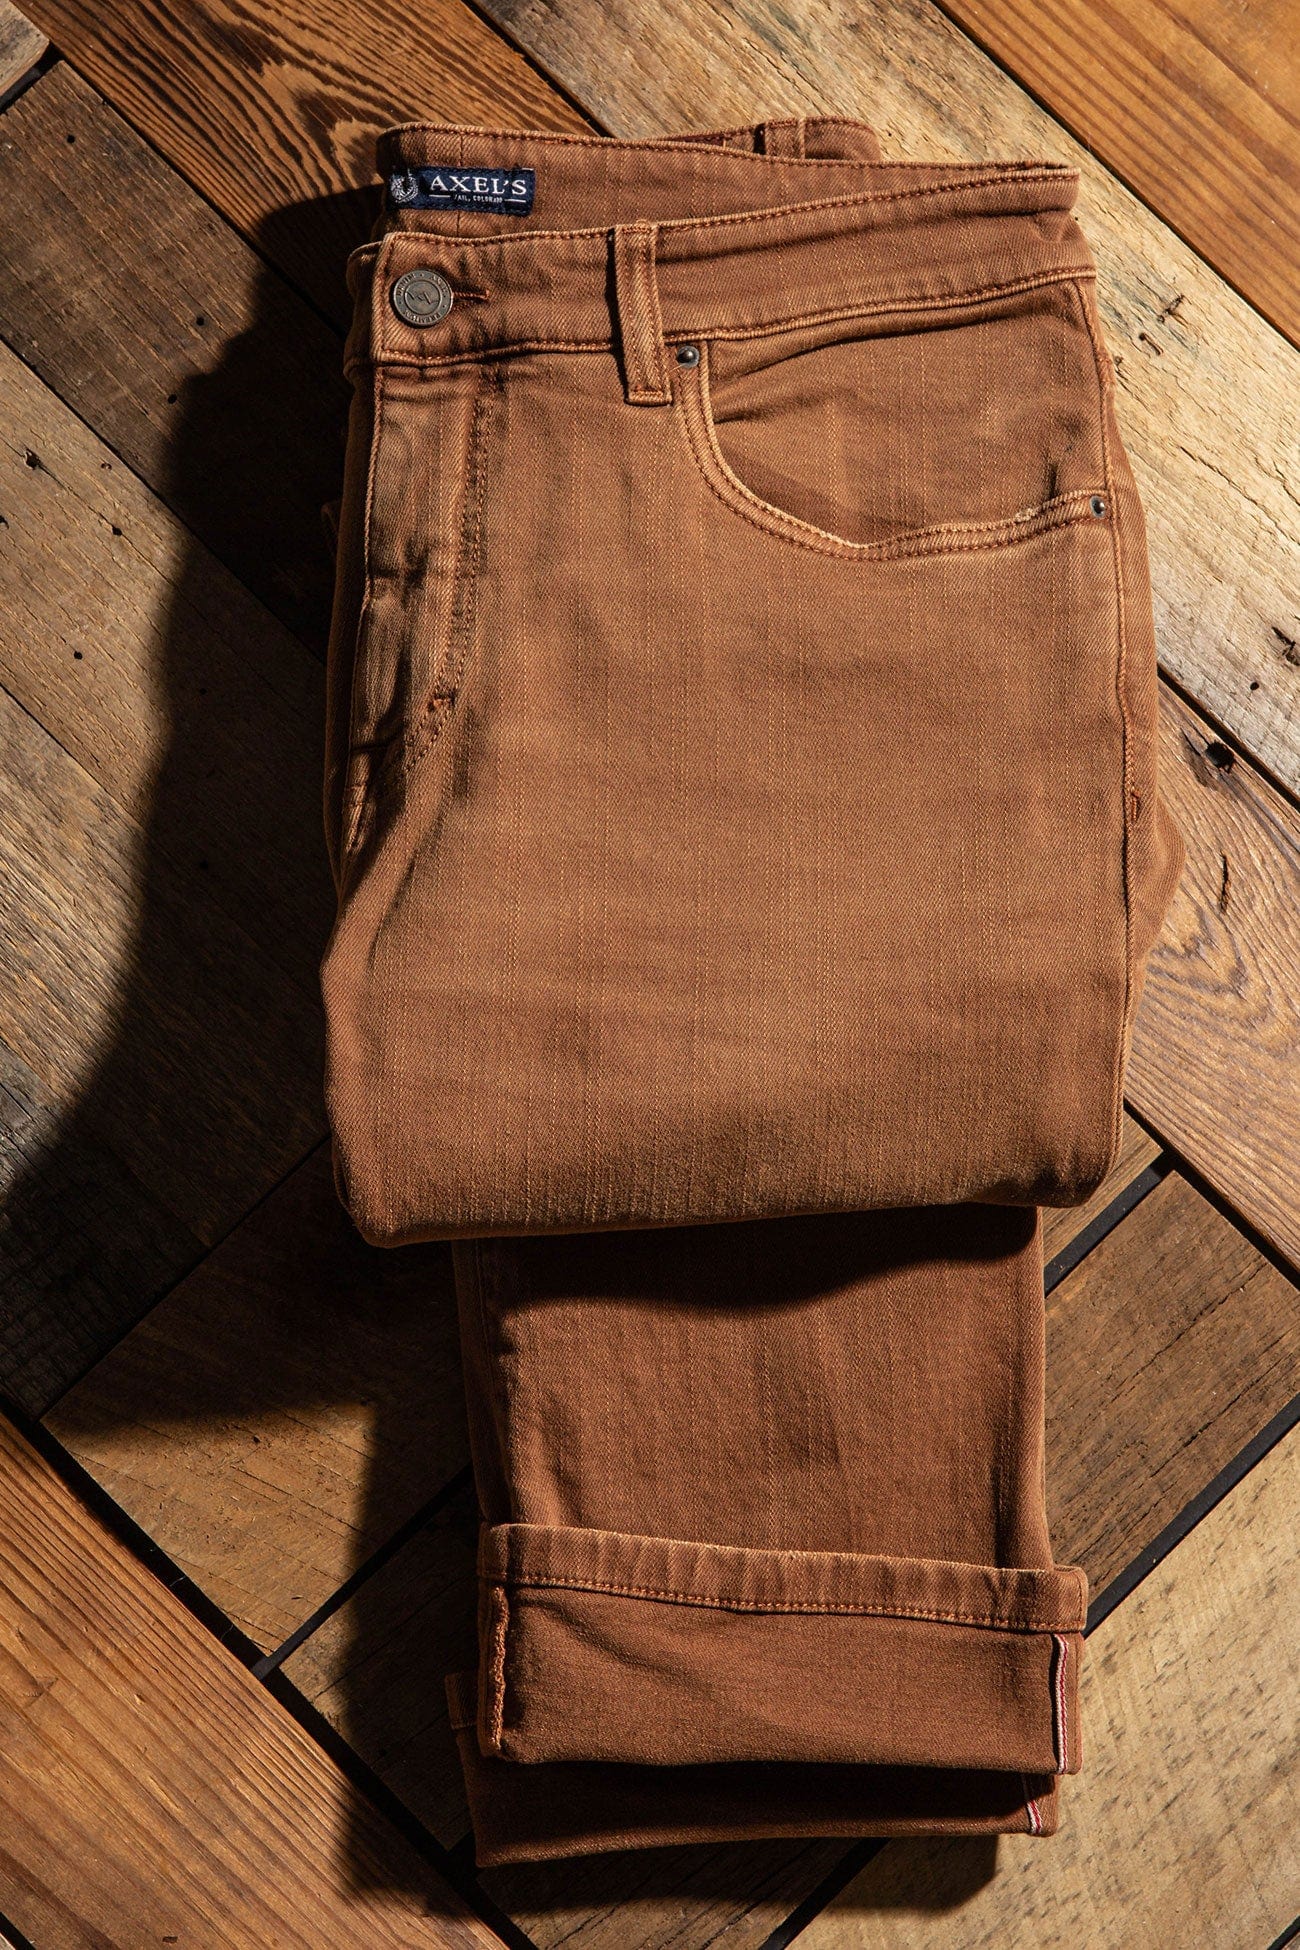 Axels Premium Denim Tucson Selvedge Denim In Cognac Mens - Pants - 5 Pocket